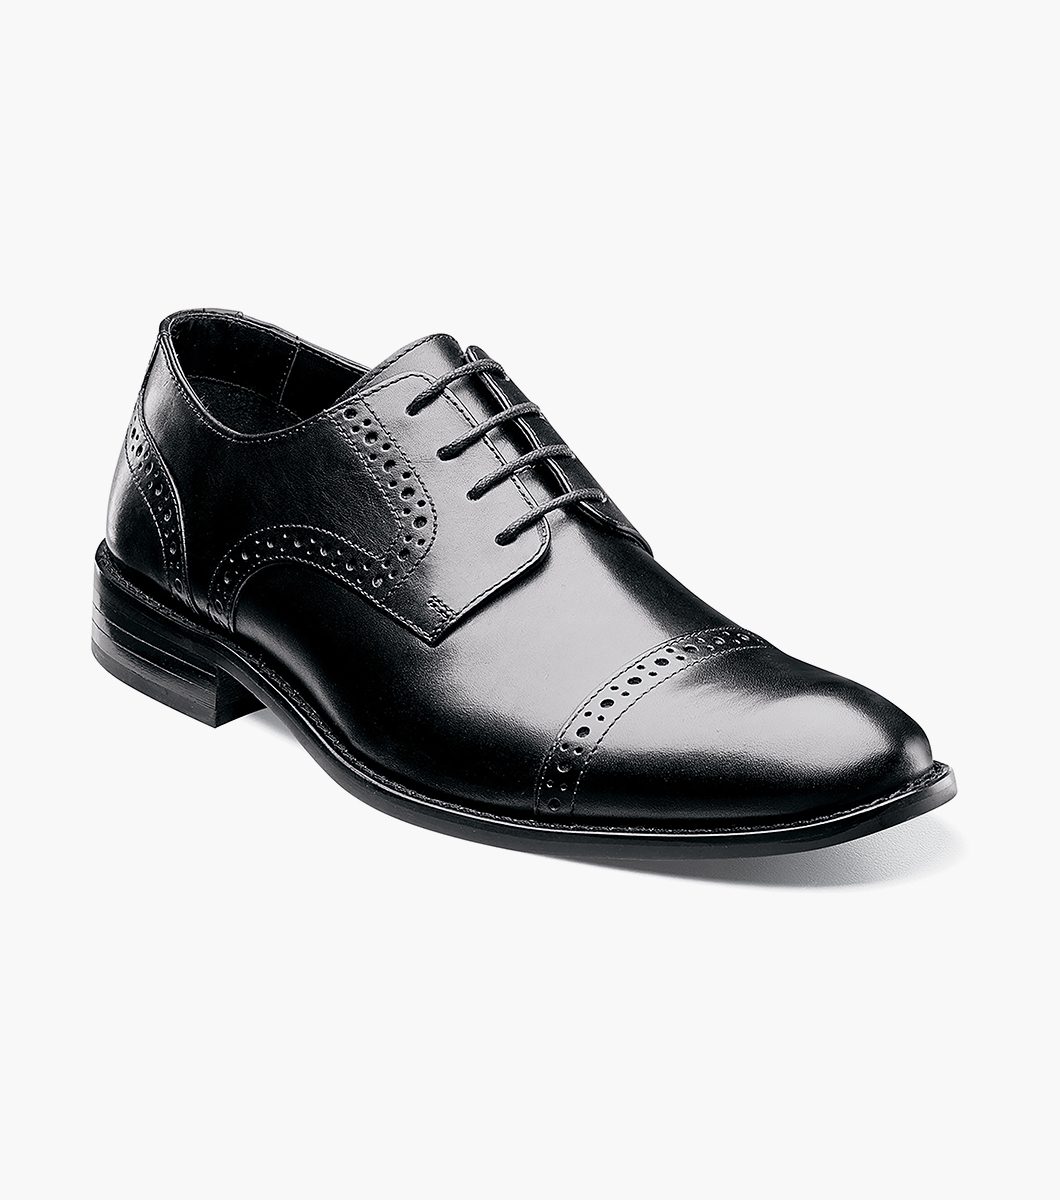 Men's Dress Shoes | Black Cap Toe Lace Up | Stacy Adams Prescott